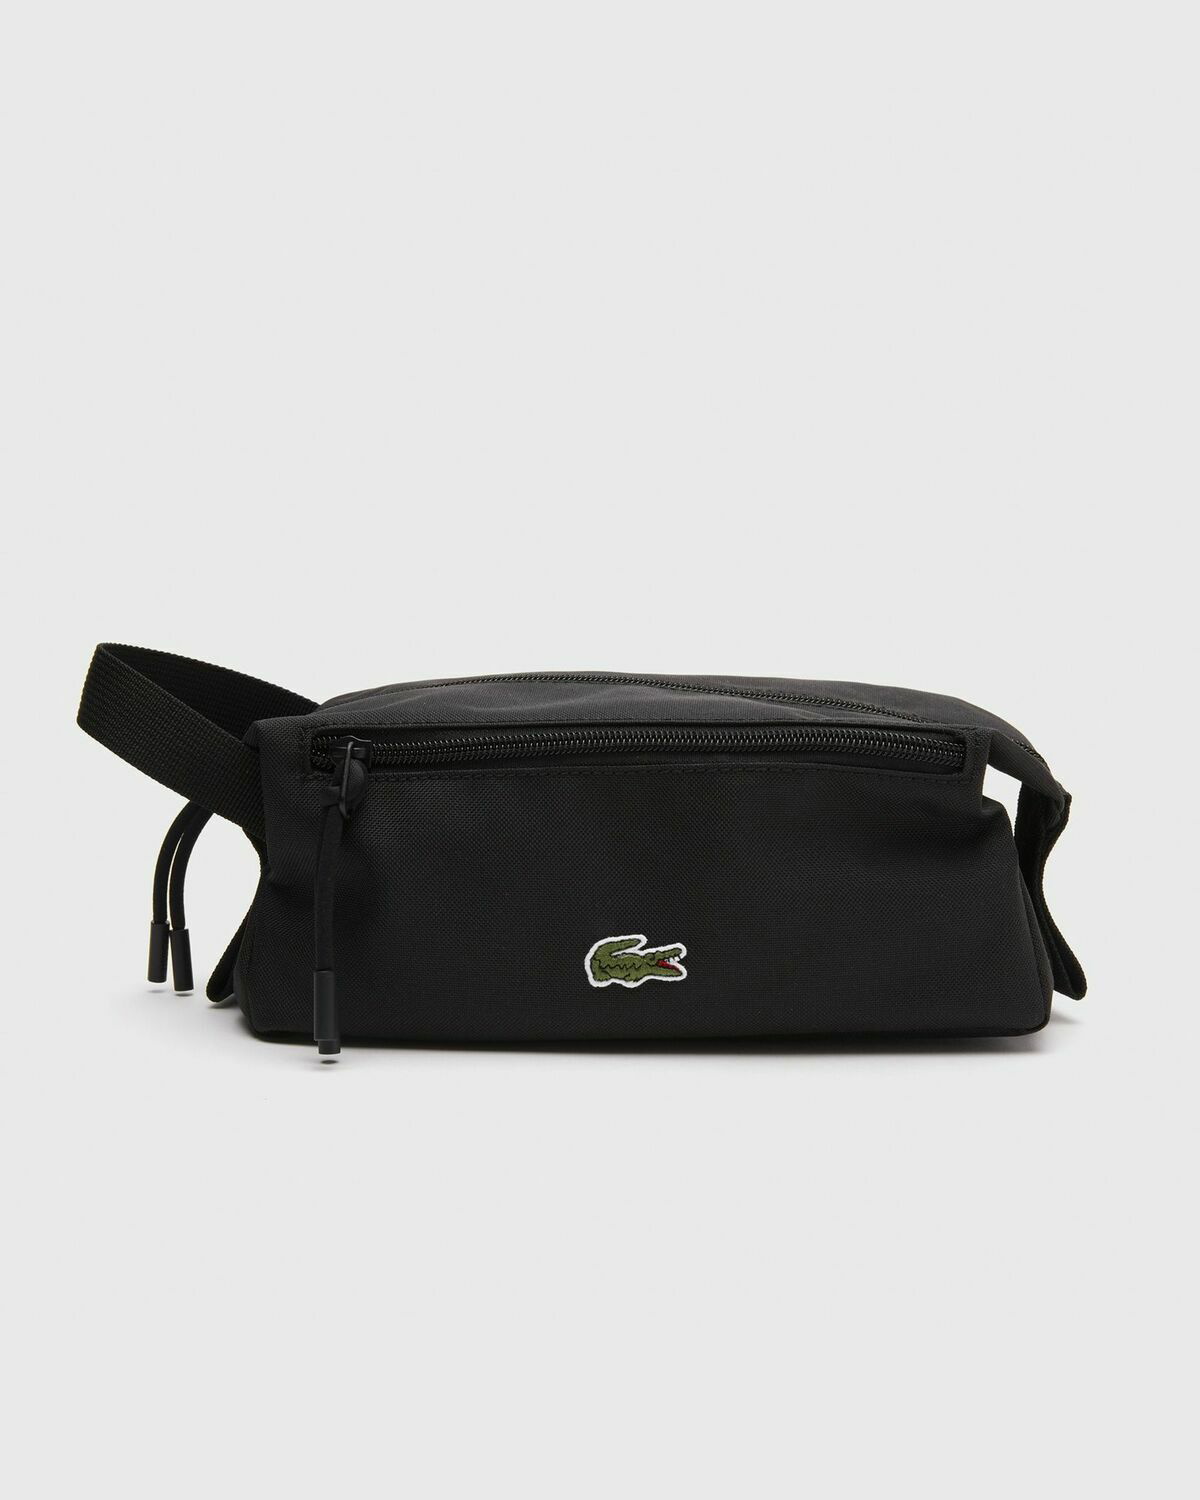 Lacoste Black 'The Blend' Monogram Backpack - ShopStyle